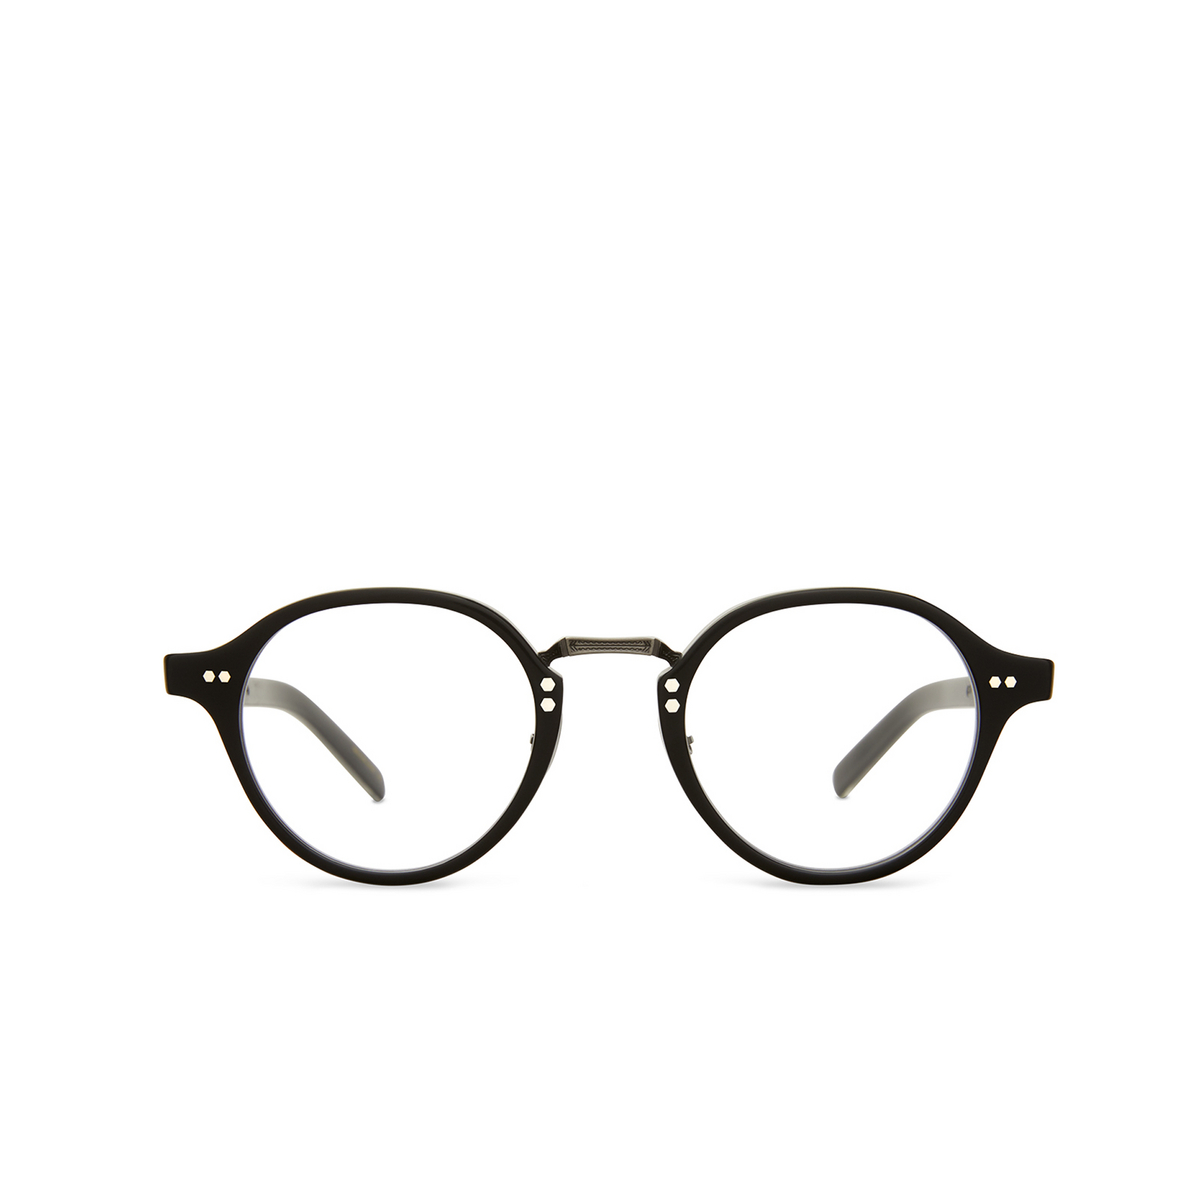 Mr. Leight SPIKE C Eyeglasses MBK-PW-MBK Matte Black-Pewter-Matte Black - front view